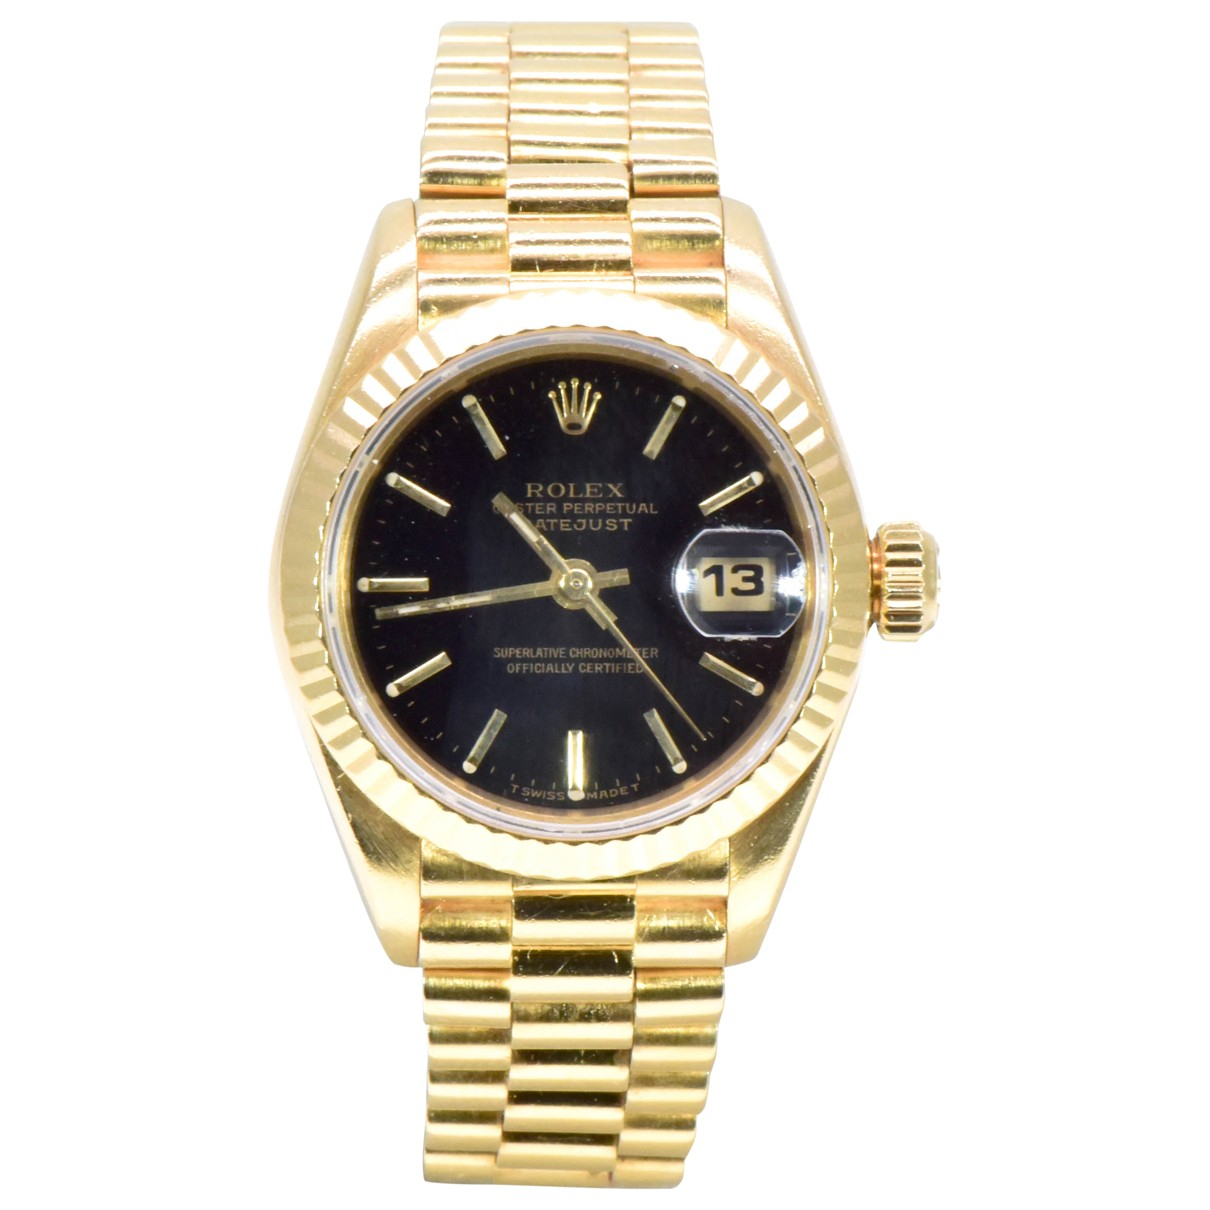 Inexpensive Lady DateJust 26mm free gold yellow watch